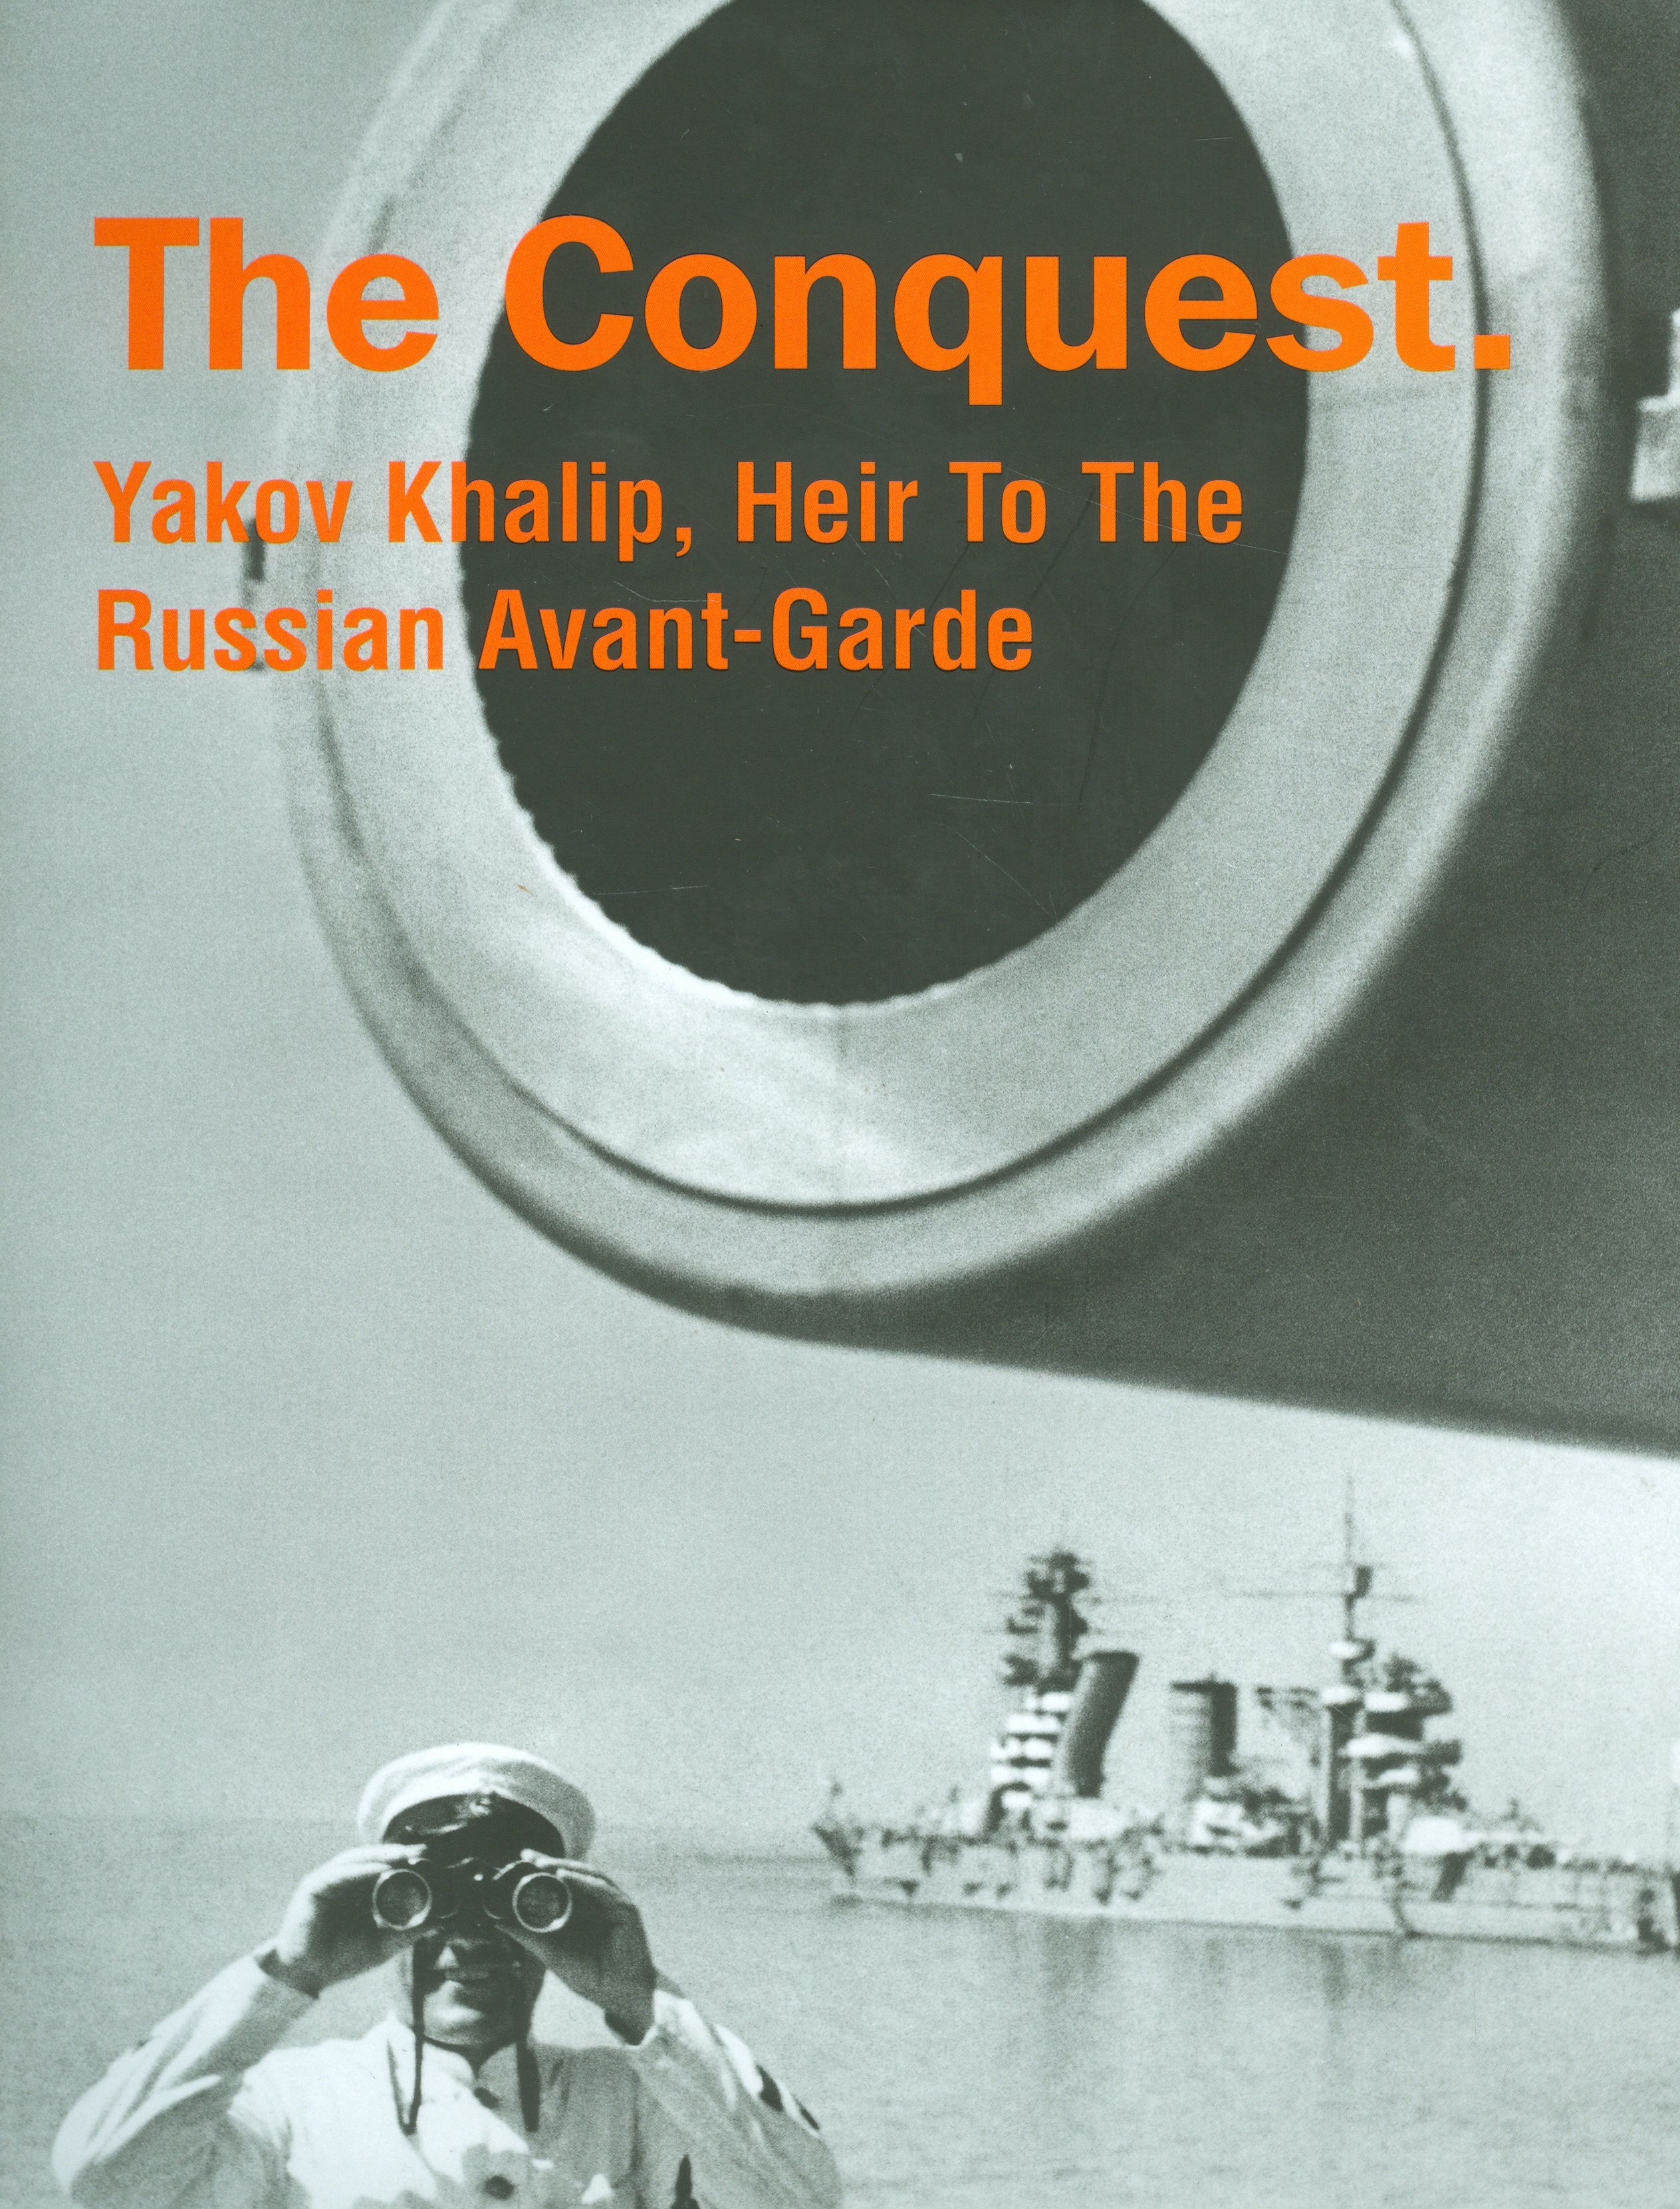 Фотоальбом.The Conquest.Yakov Khalip,Heir To The Russian Avant-Garde (на англ.яз.)